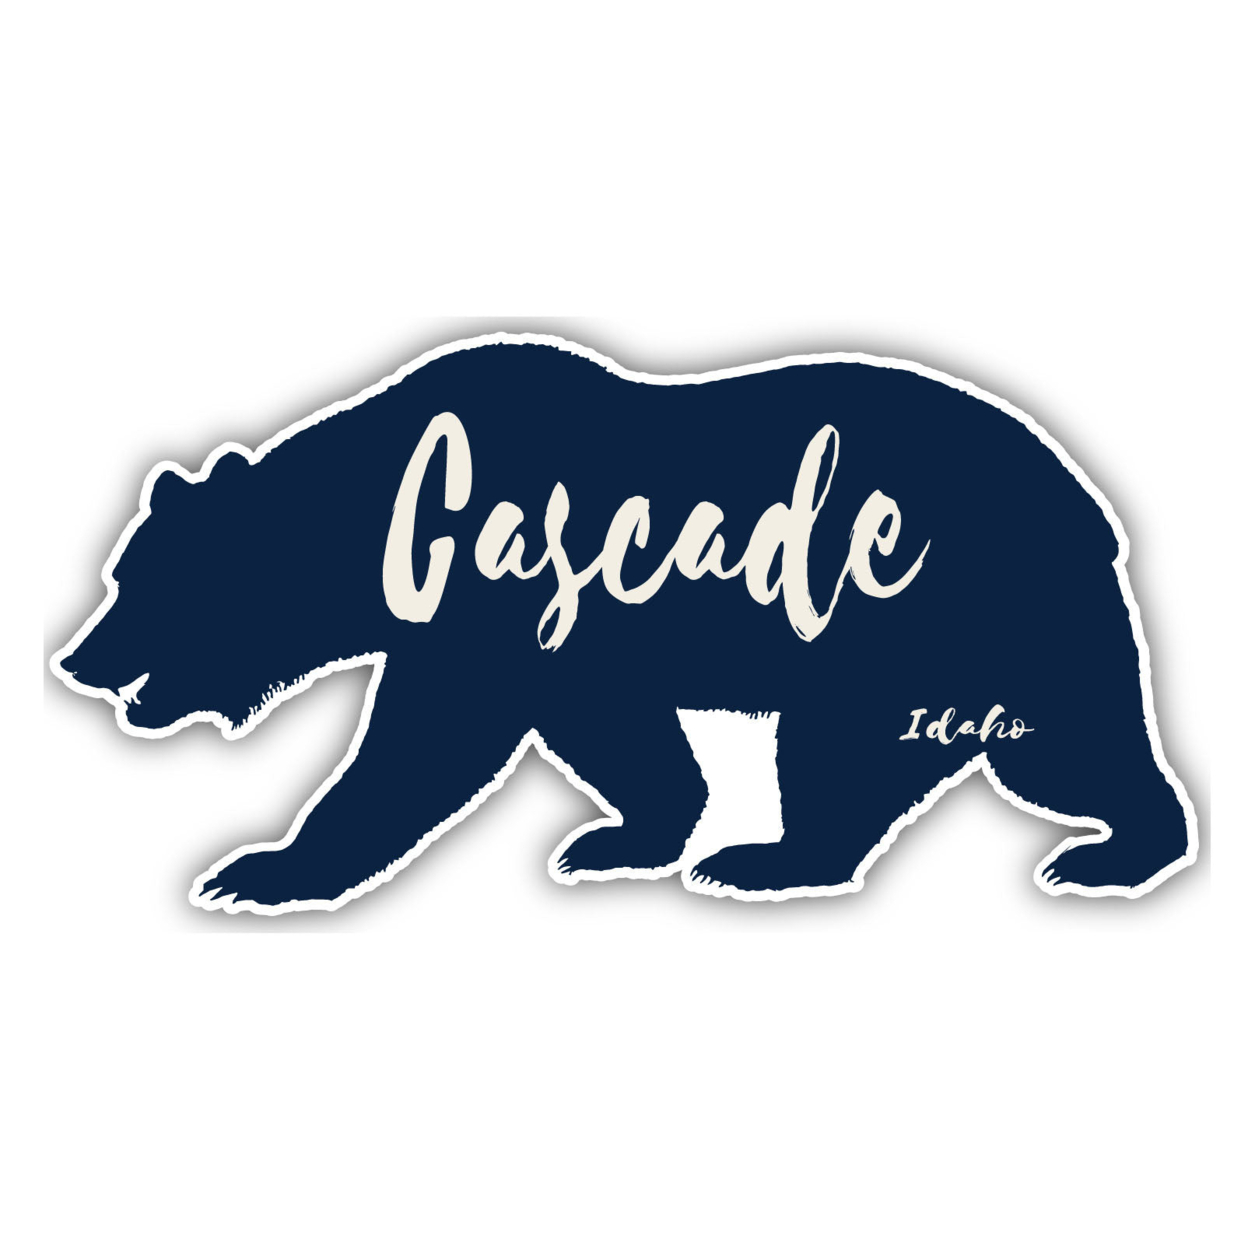 Cascade Idaho Souvenir Decorative Stickers (Choose Theme And Size) - Single Unit, 6-Inch, Bear